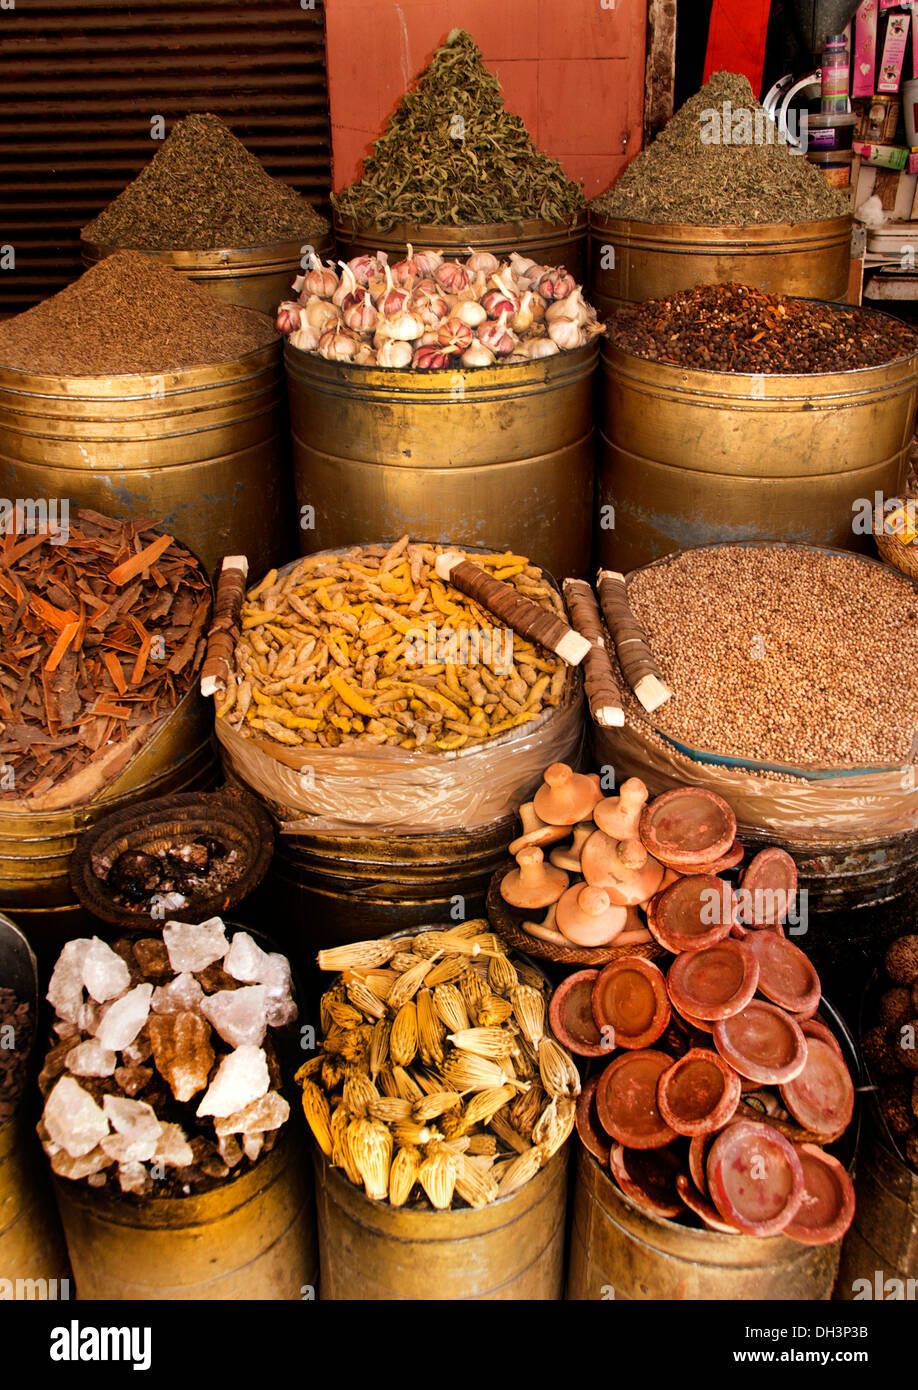 Marrakesch Lebensmittelhändler Gewürz Kräuter würzen Markt Marokko Stockfoto